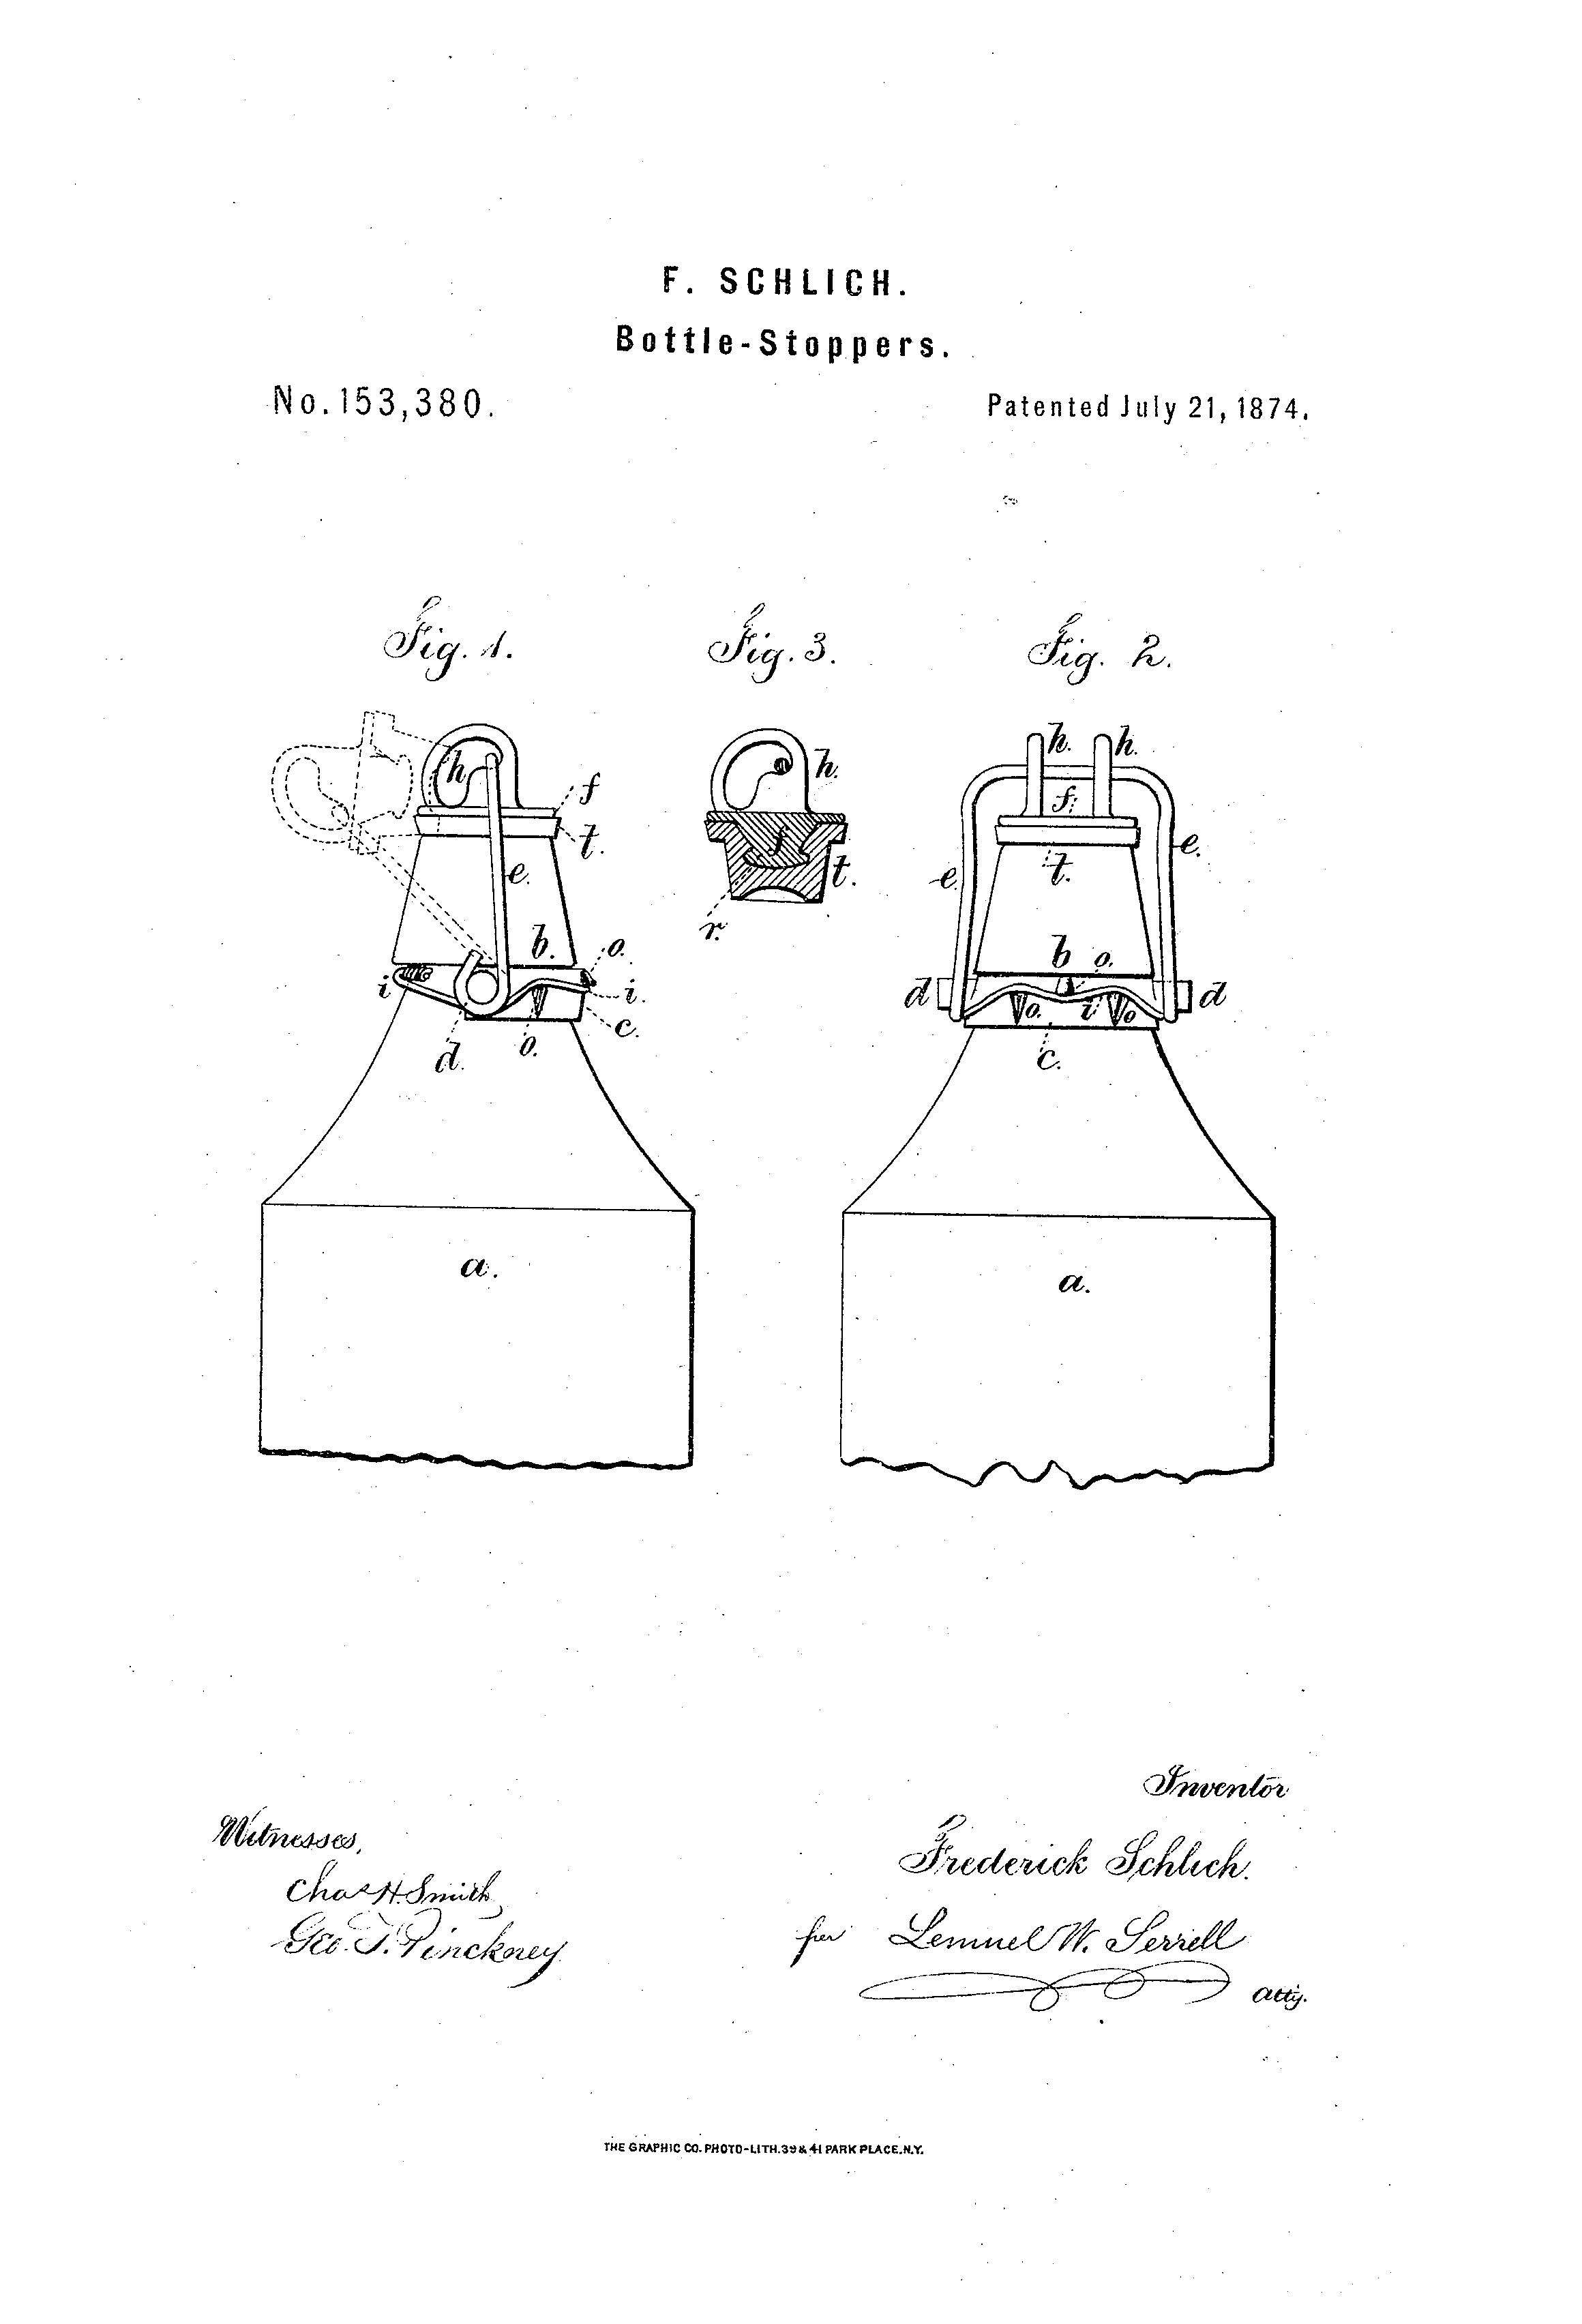 Patent 153,380